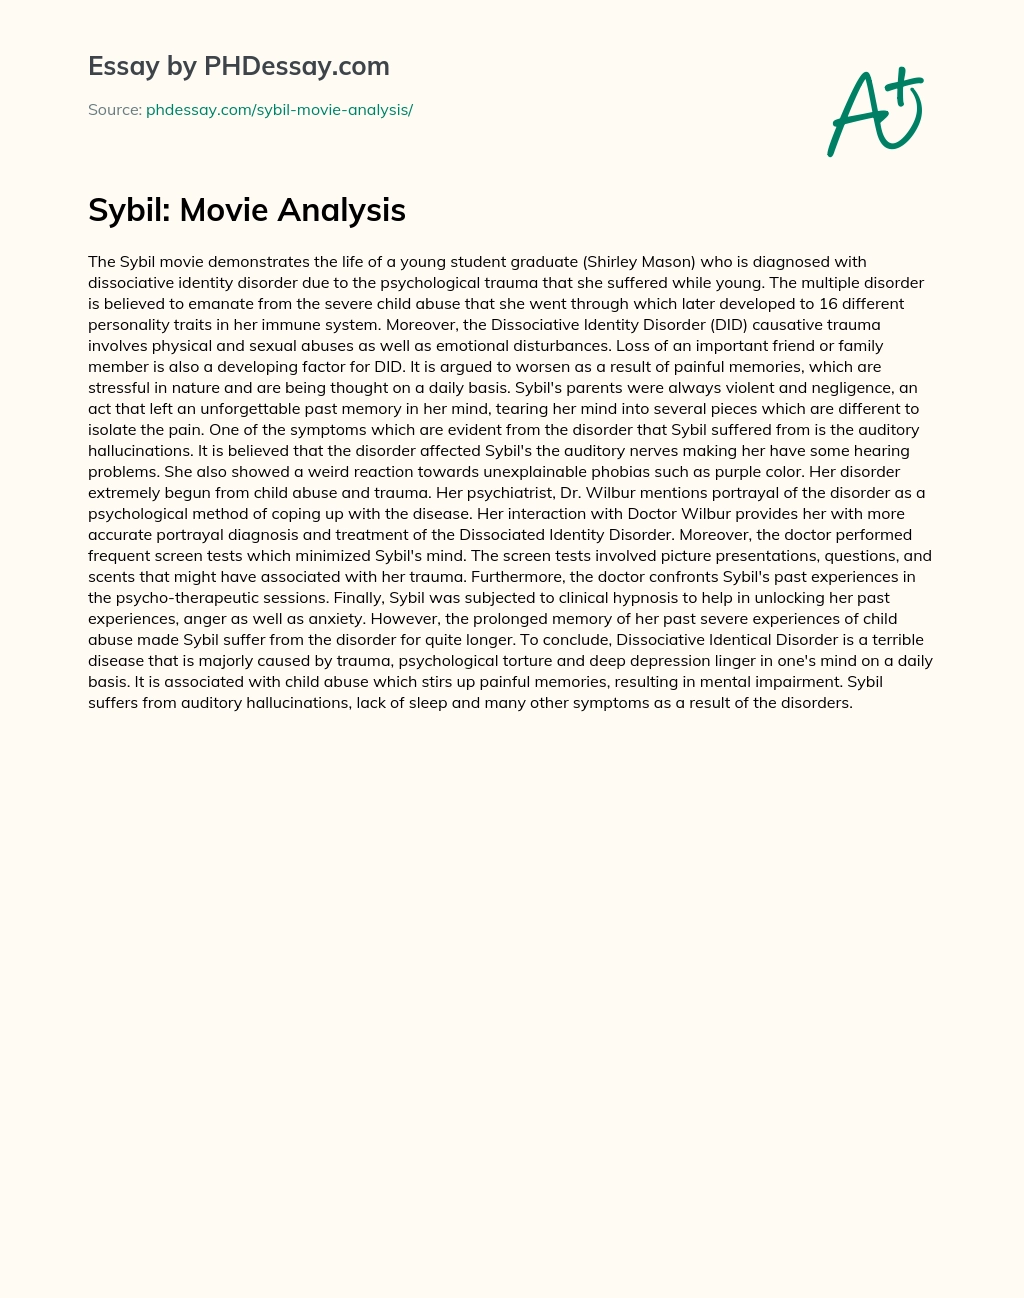 Sybil: Movie Analysis essay